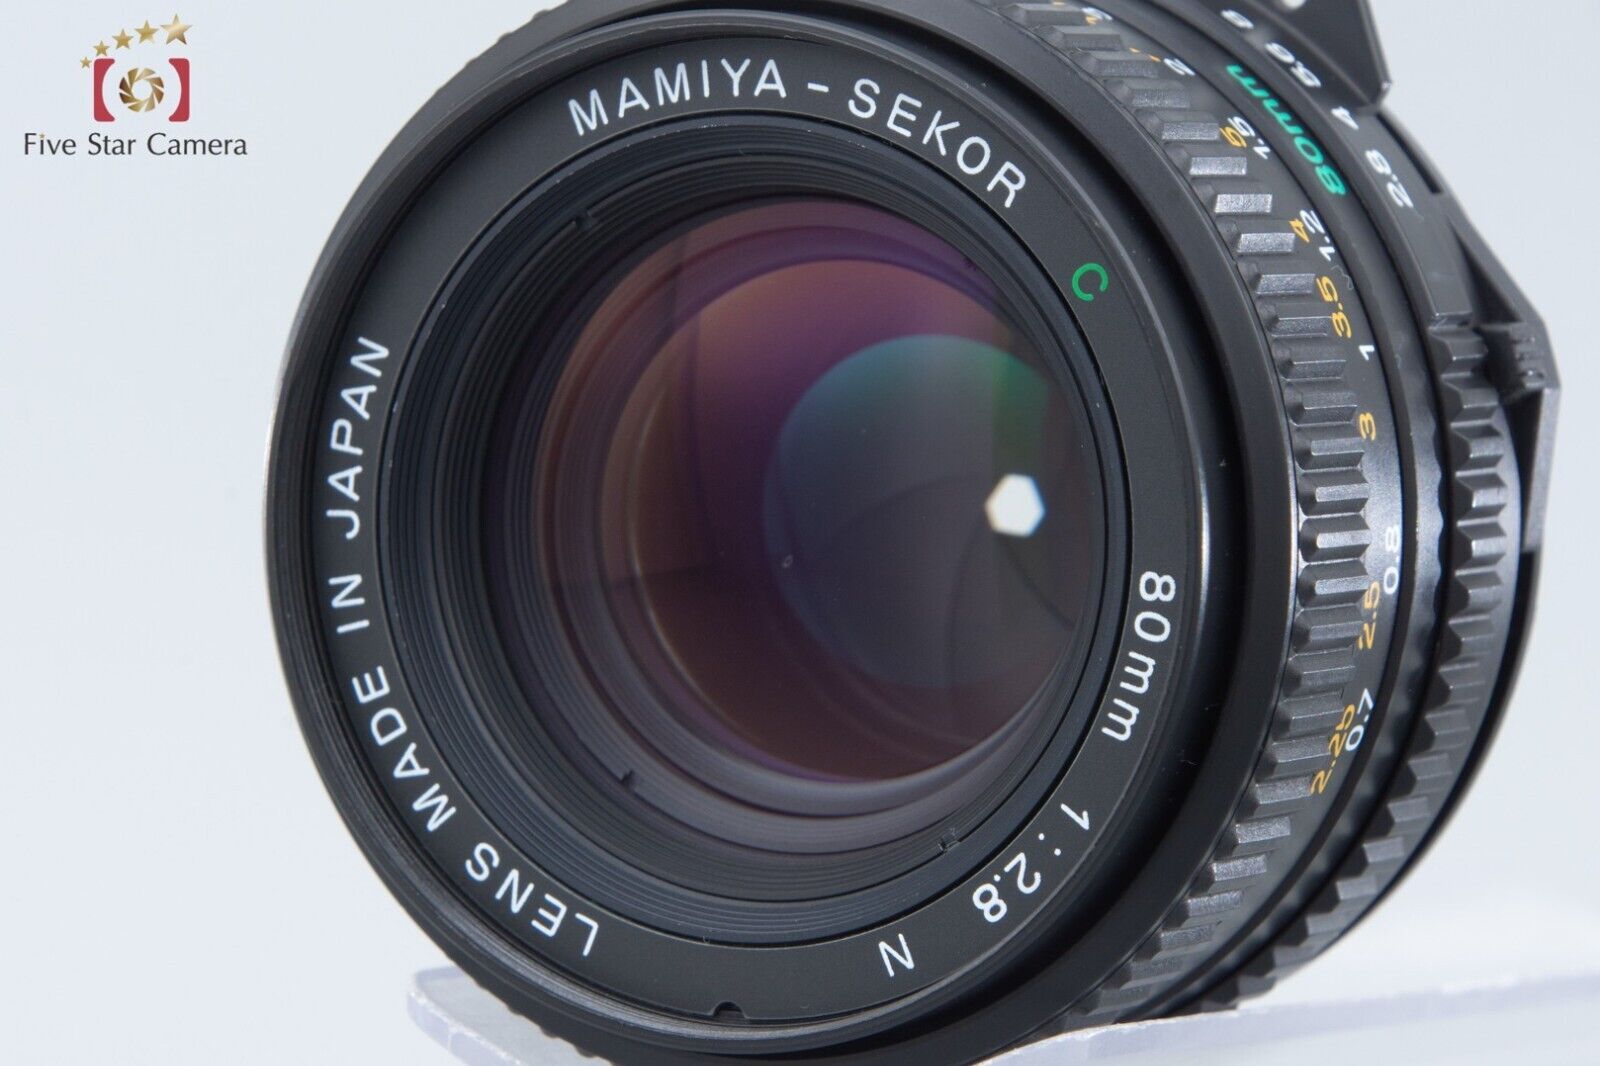 Mamiya SEKOR C 80mm f/2.8 N for 645